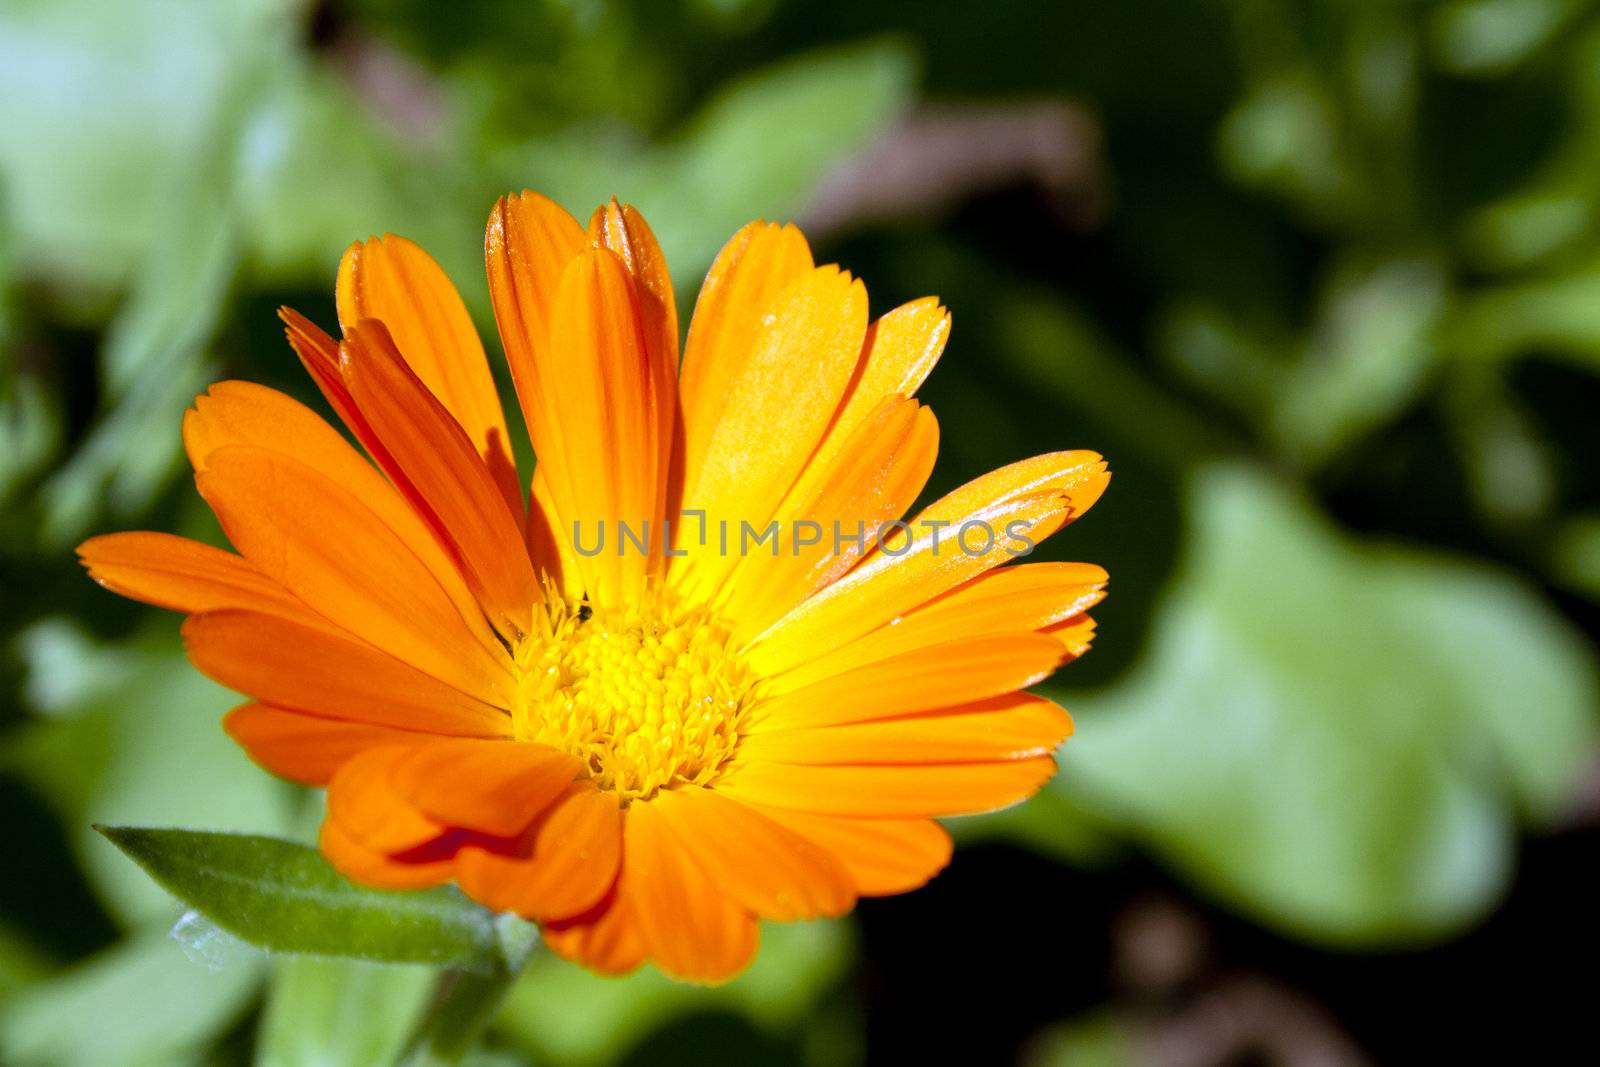 Marigold flower with orange petals